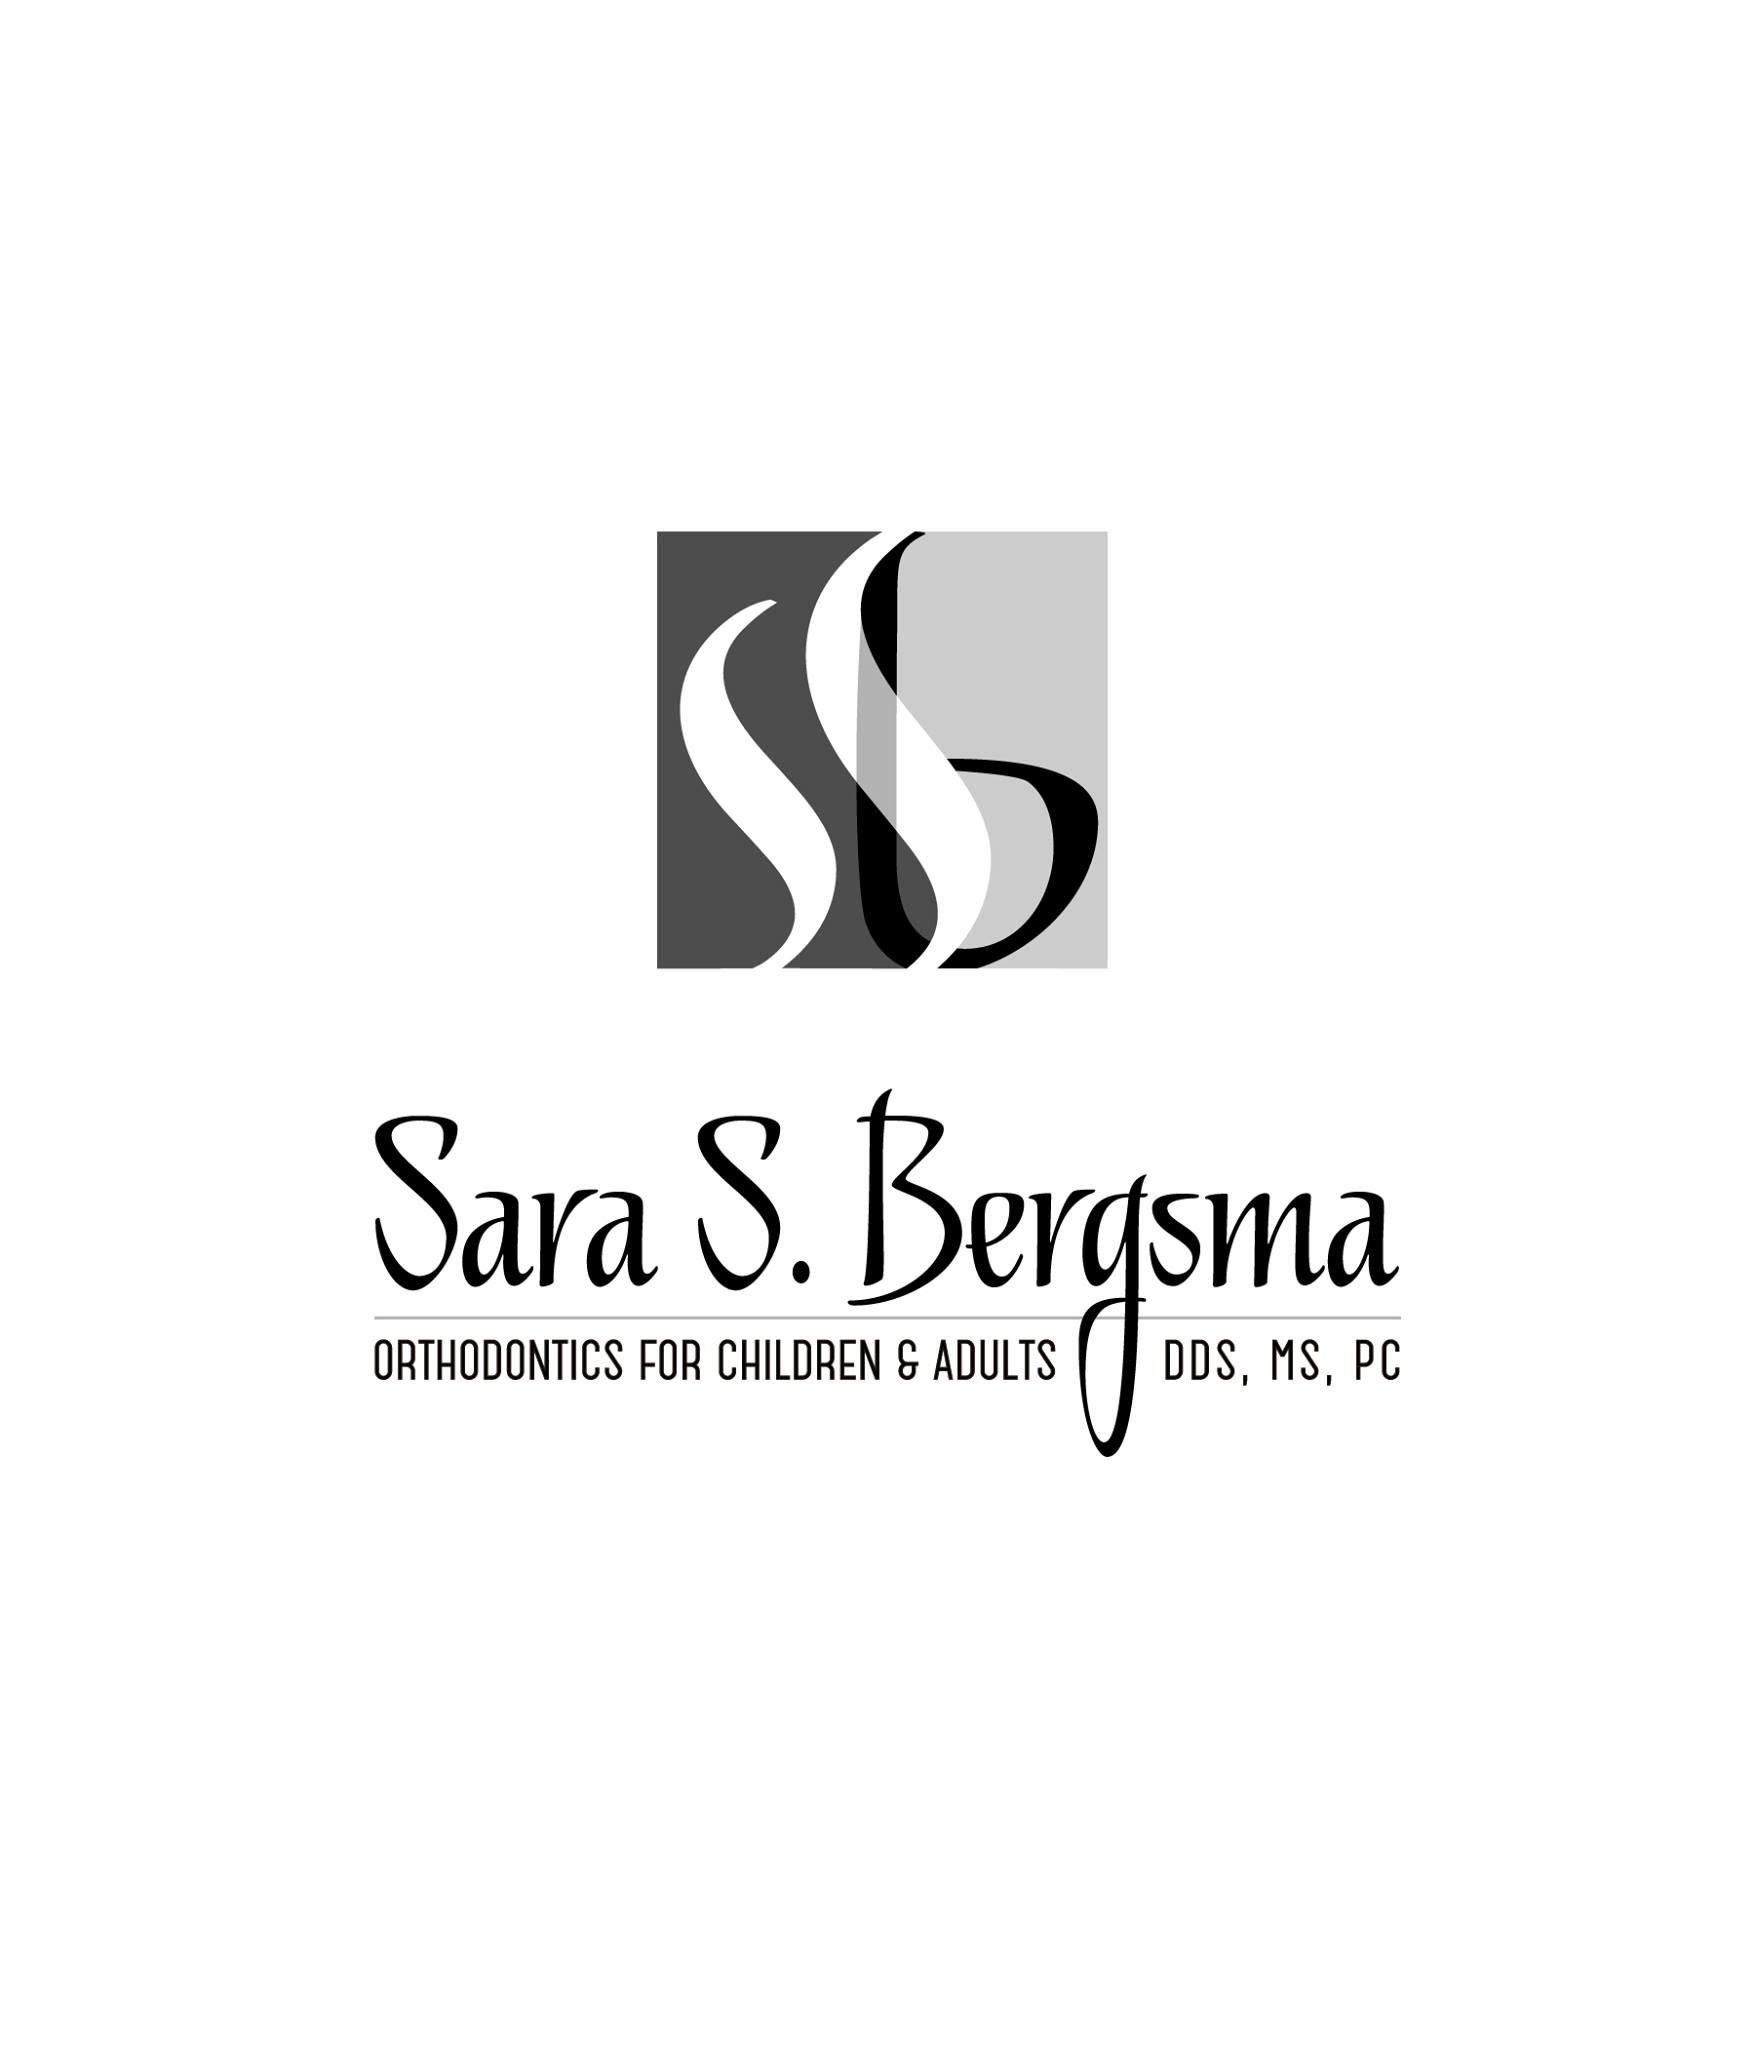 Dr. Sara Bergsma Orthodontics